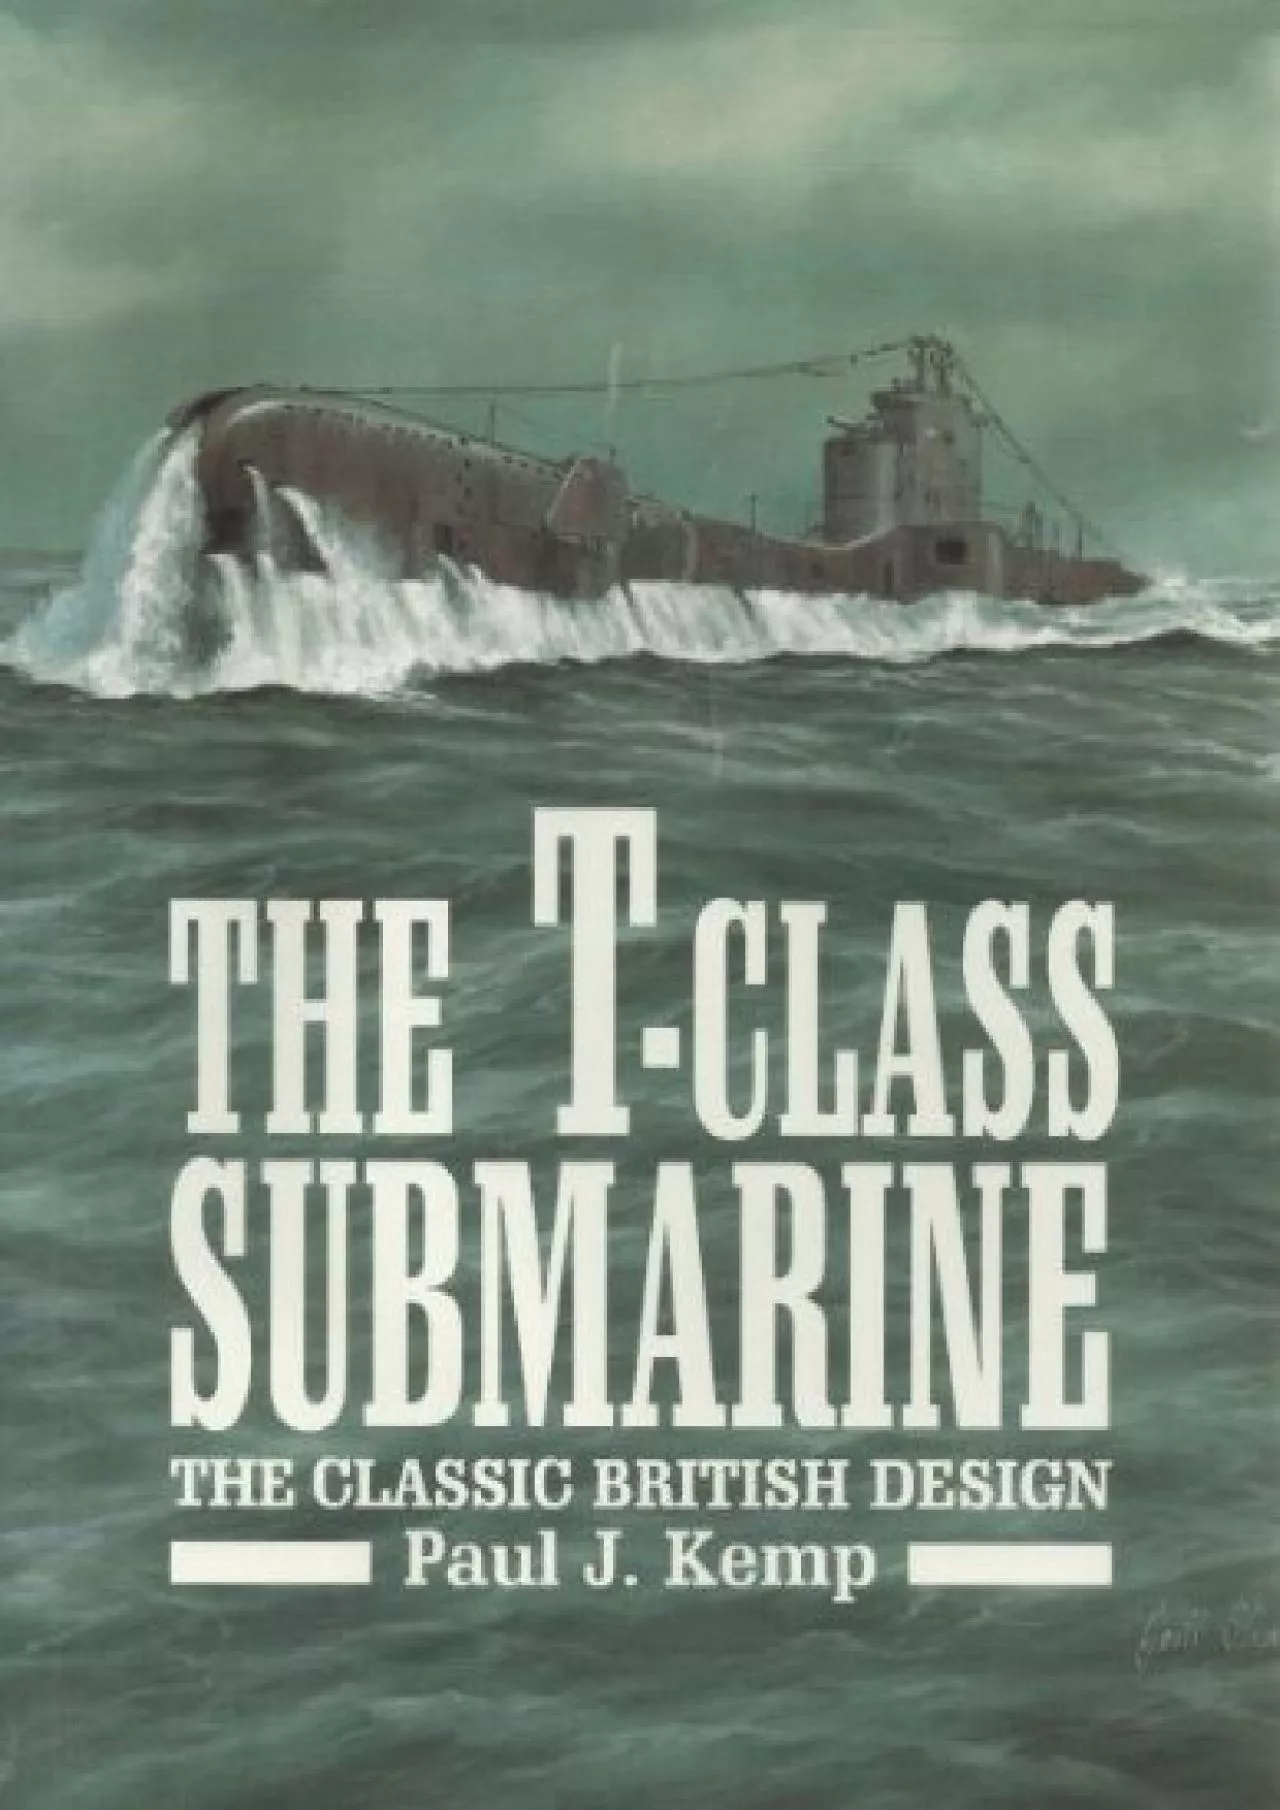 [BOOK]-The T-Class Submarine: The Classic British Design